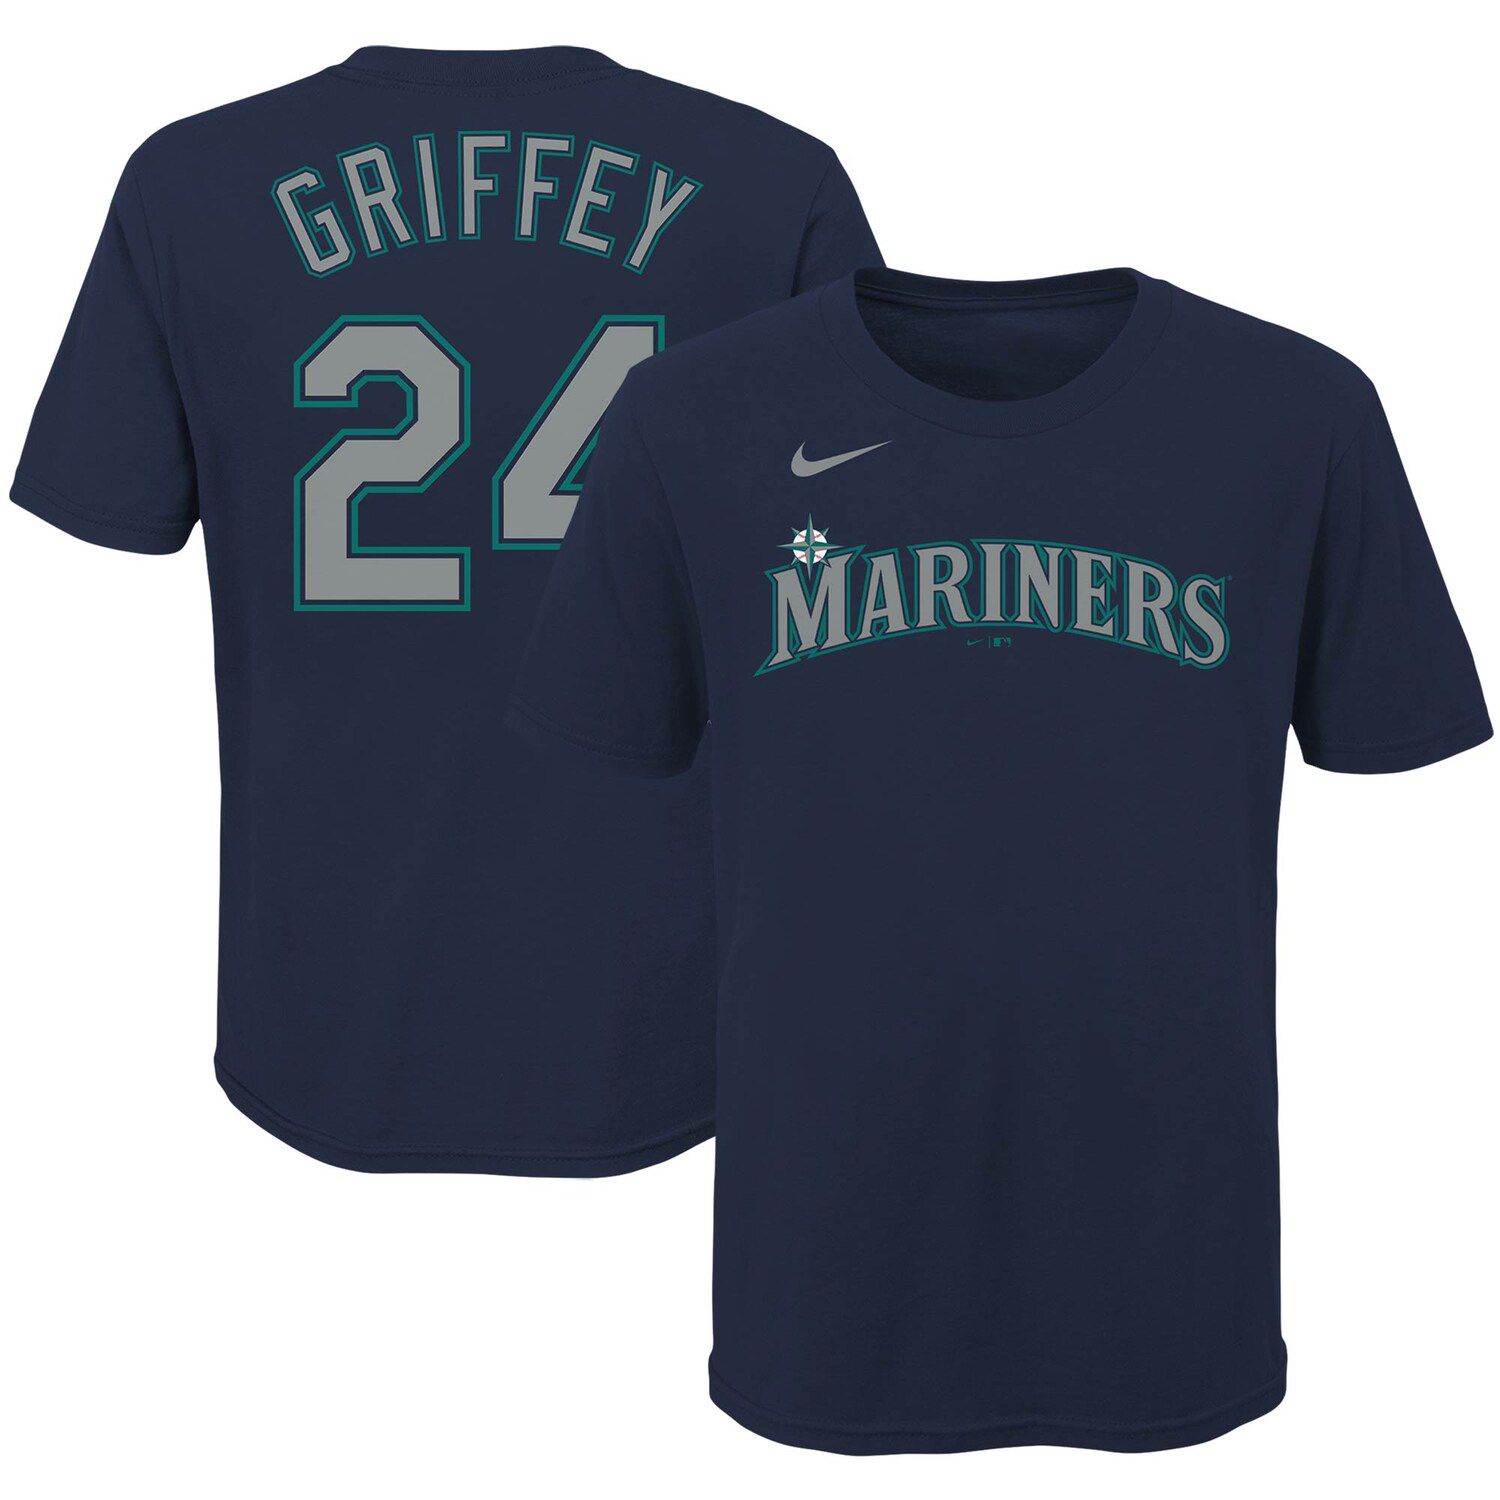 griffey mariners jersey